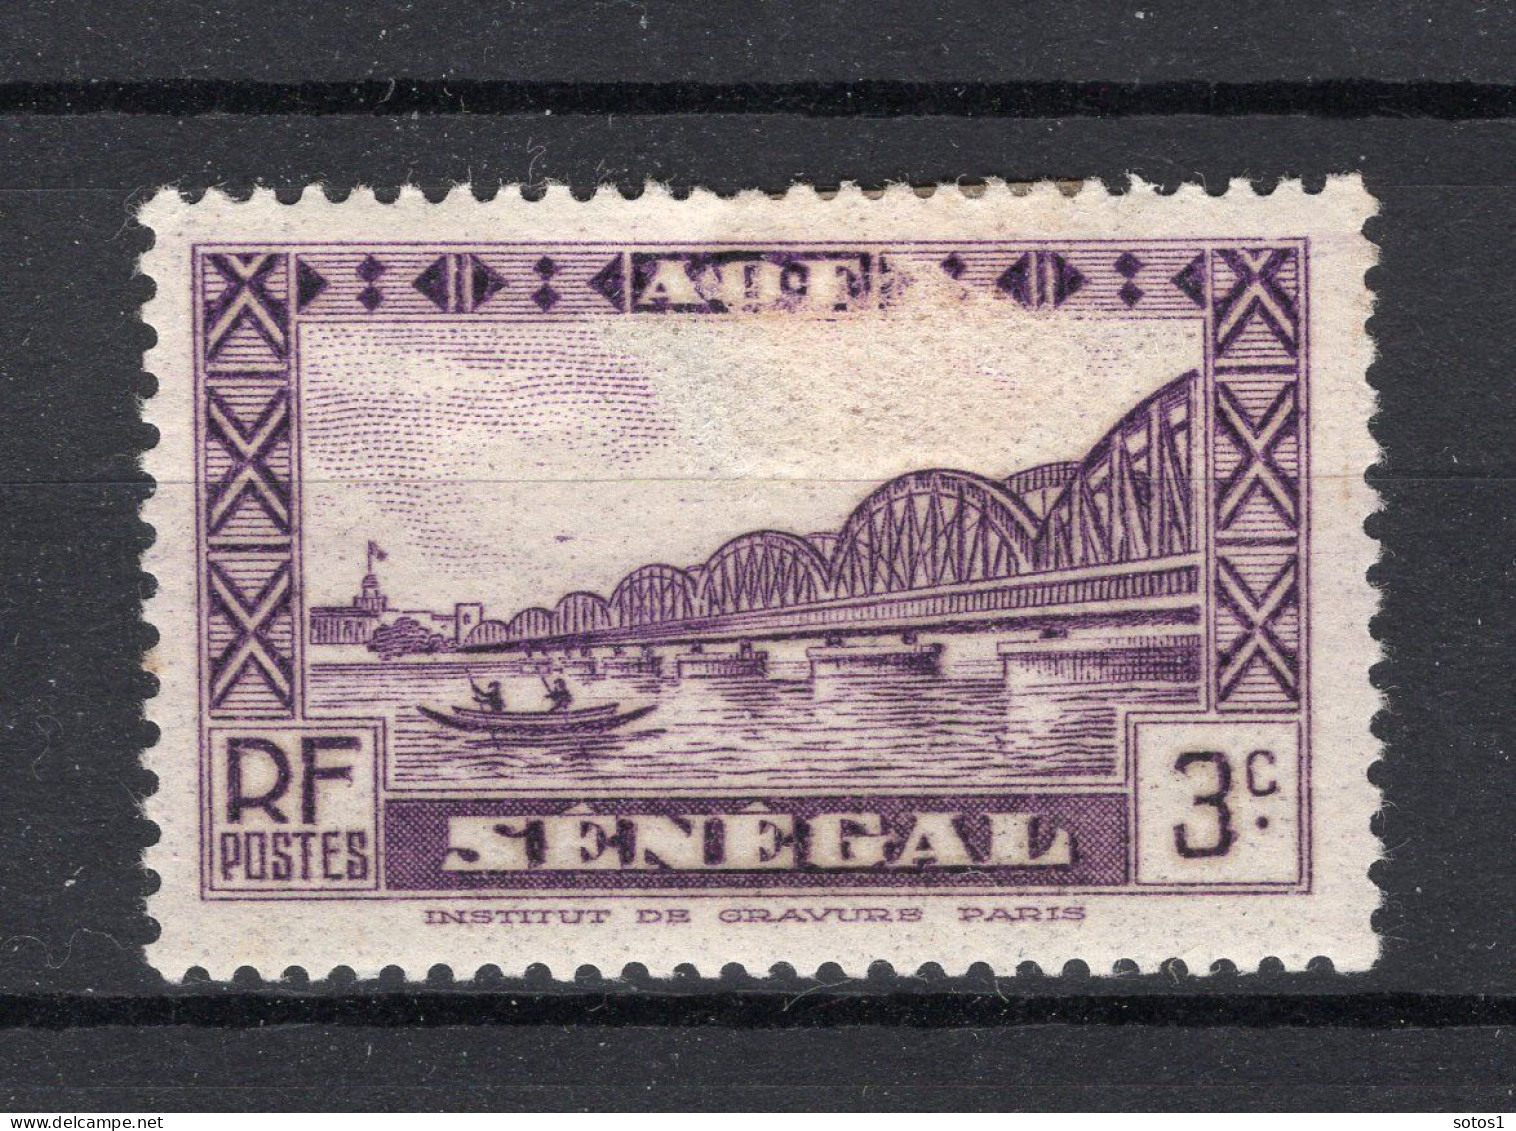 SENEGAL Yt. 160 MH 1939-1940 - Neufs